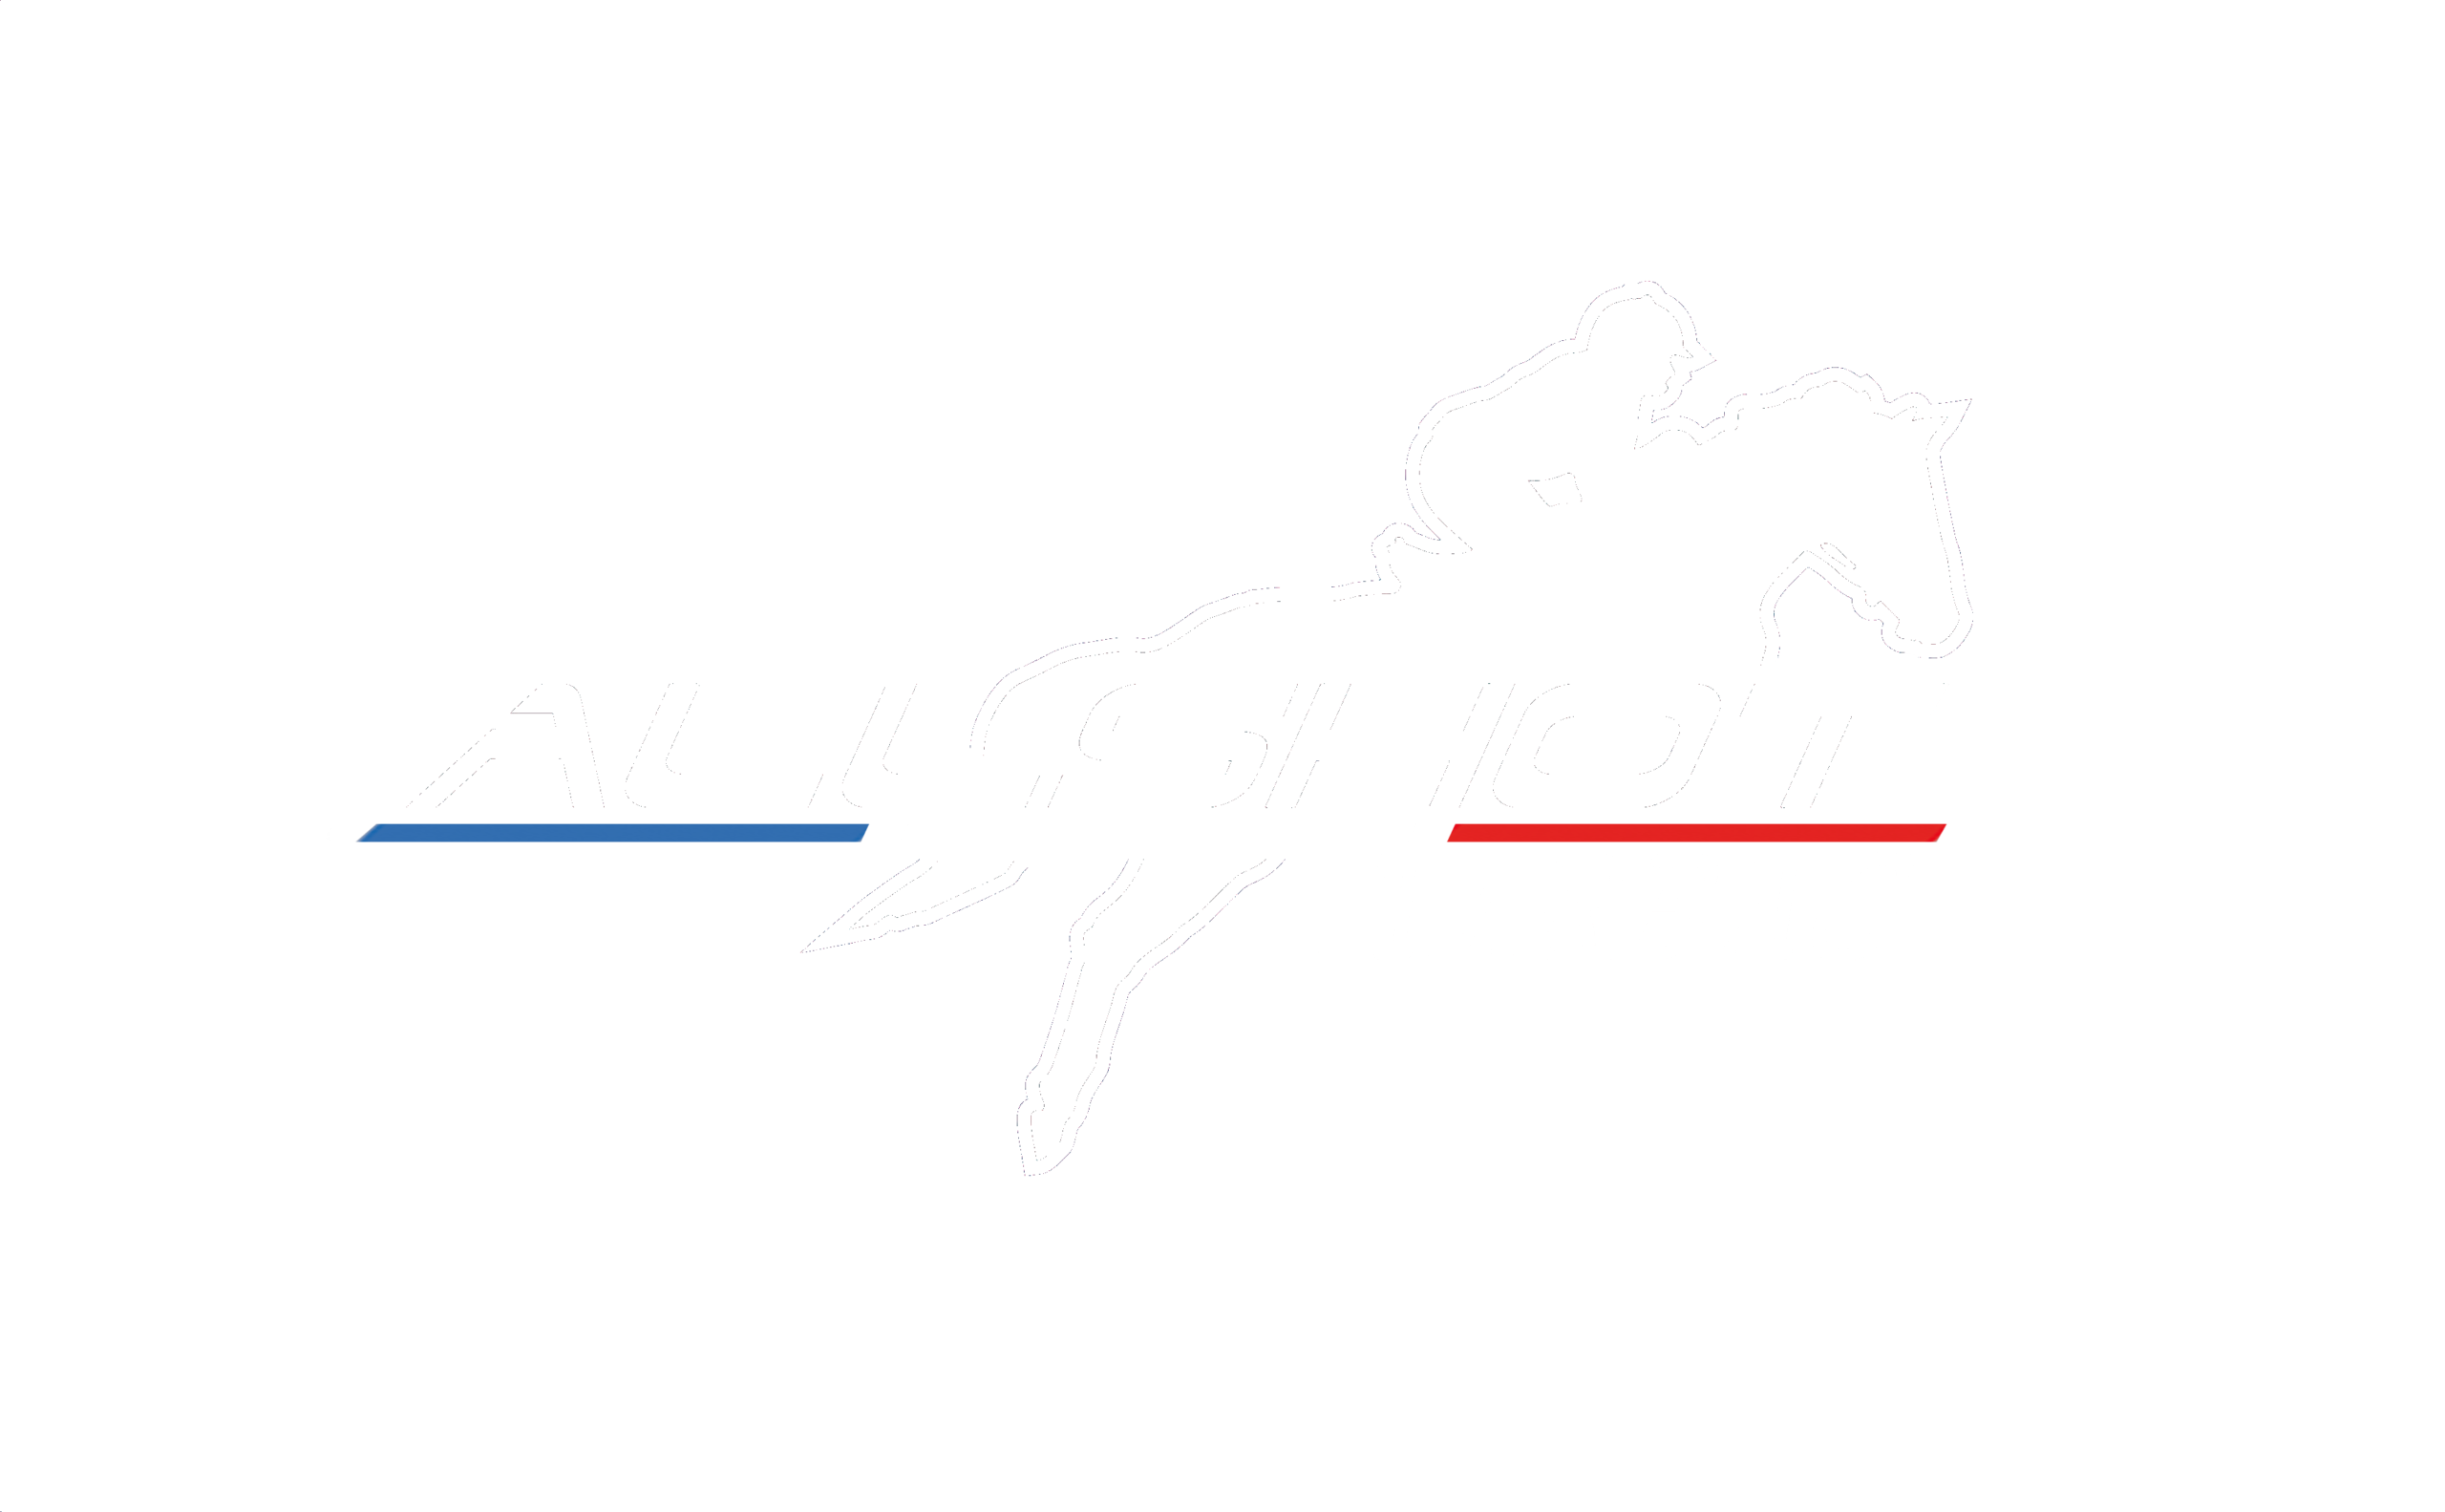 logo-allshot-airbag-equitation-francais-askara-gilet-protection-cavalier-equitation